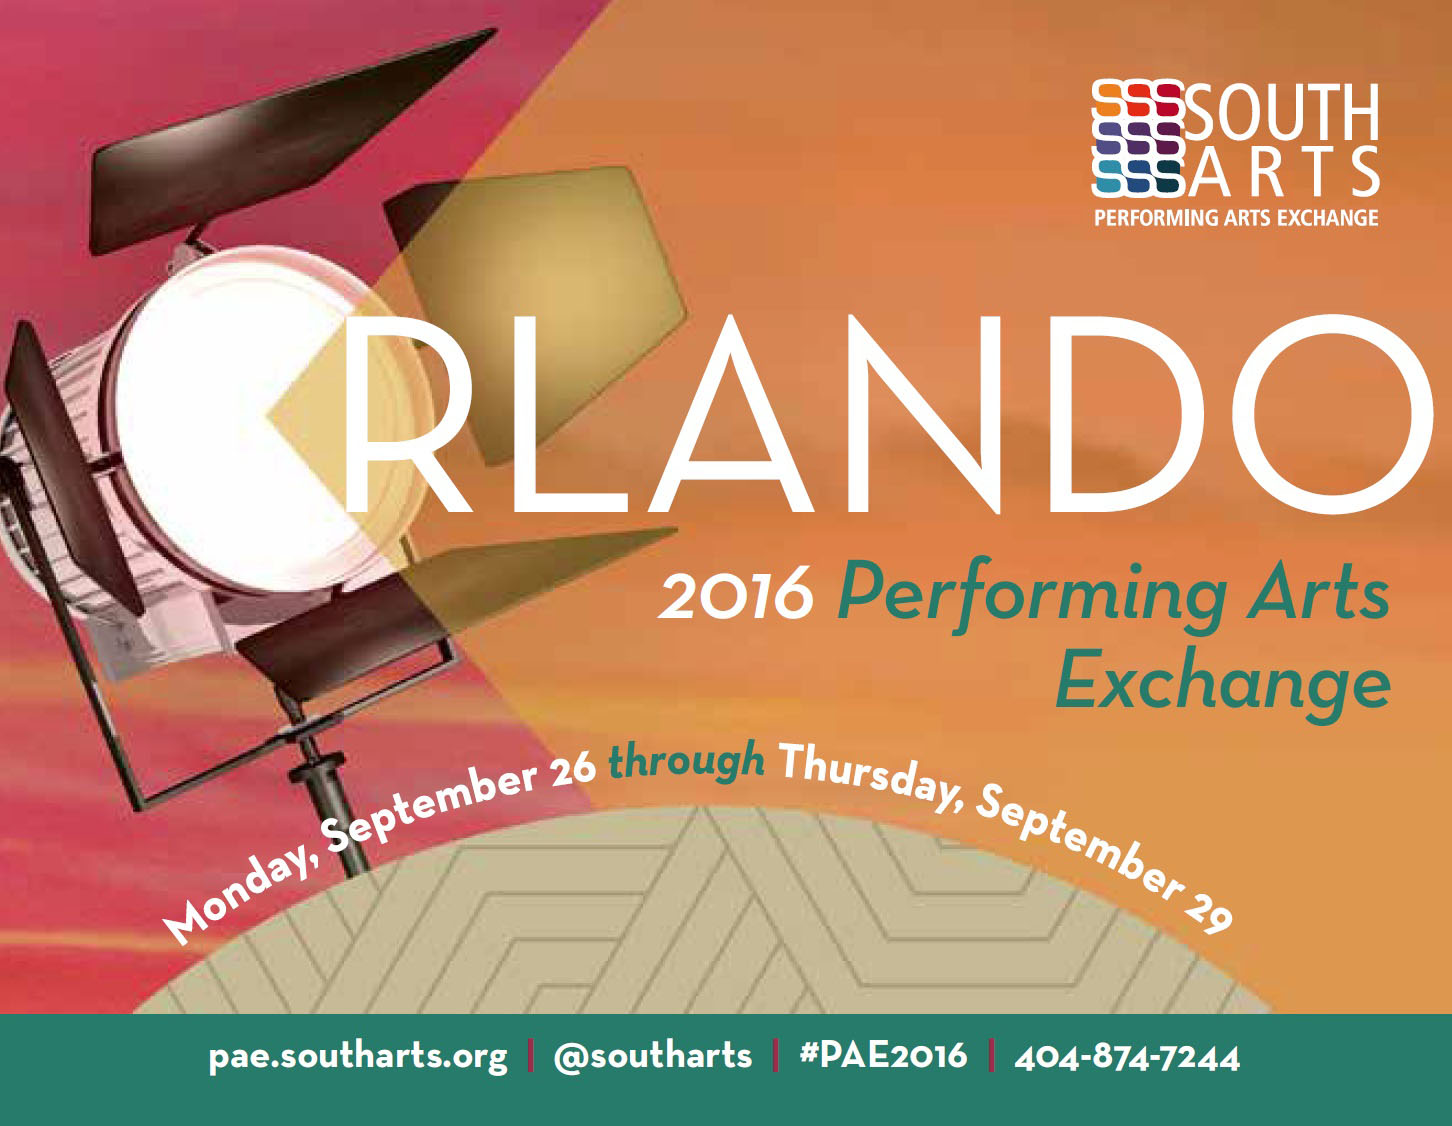 South Arts hosting 2016 Performing Arts Exchange in Orlando, Fla.